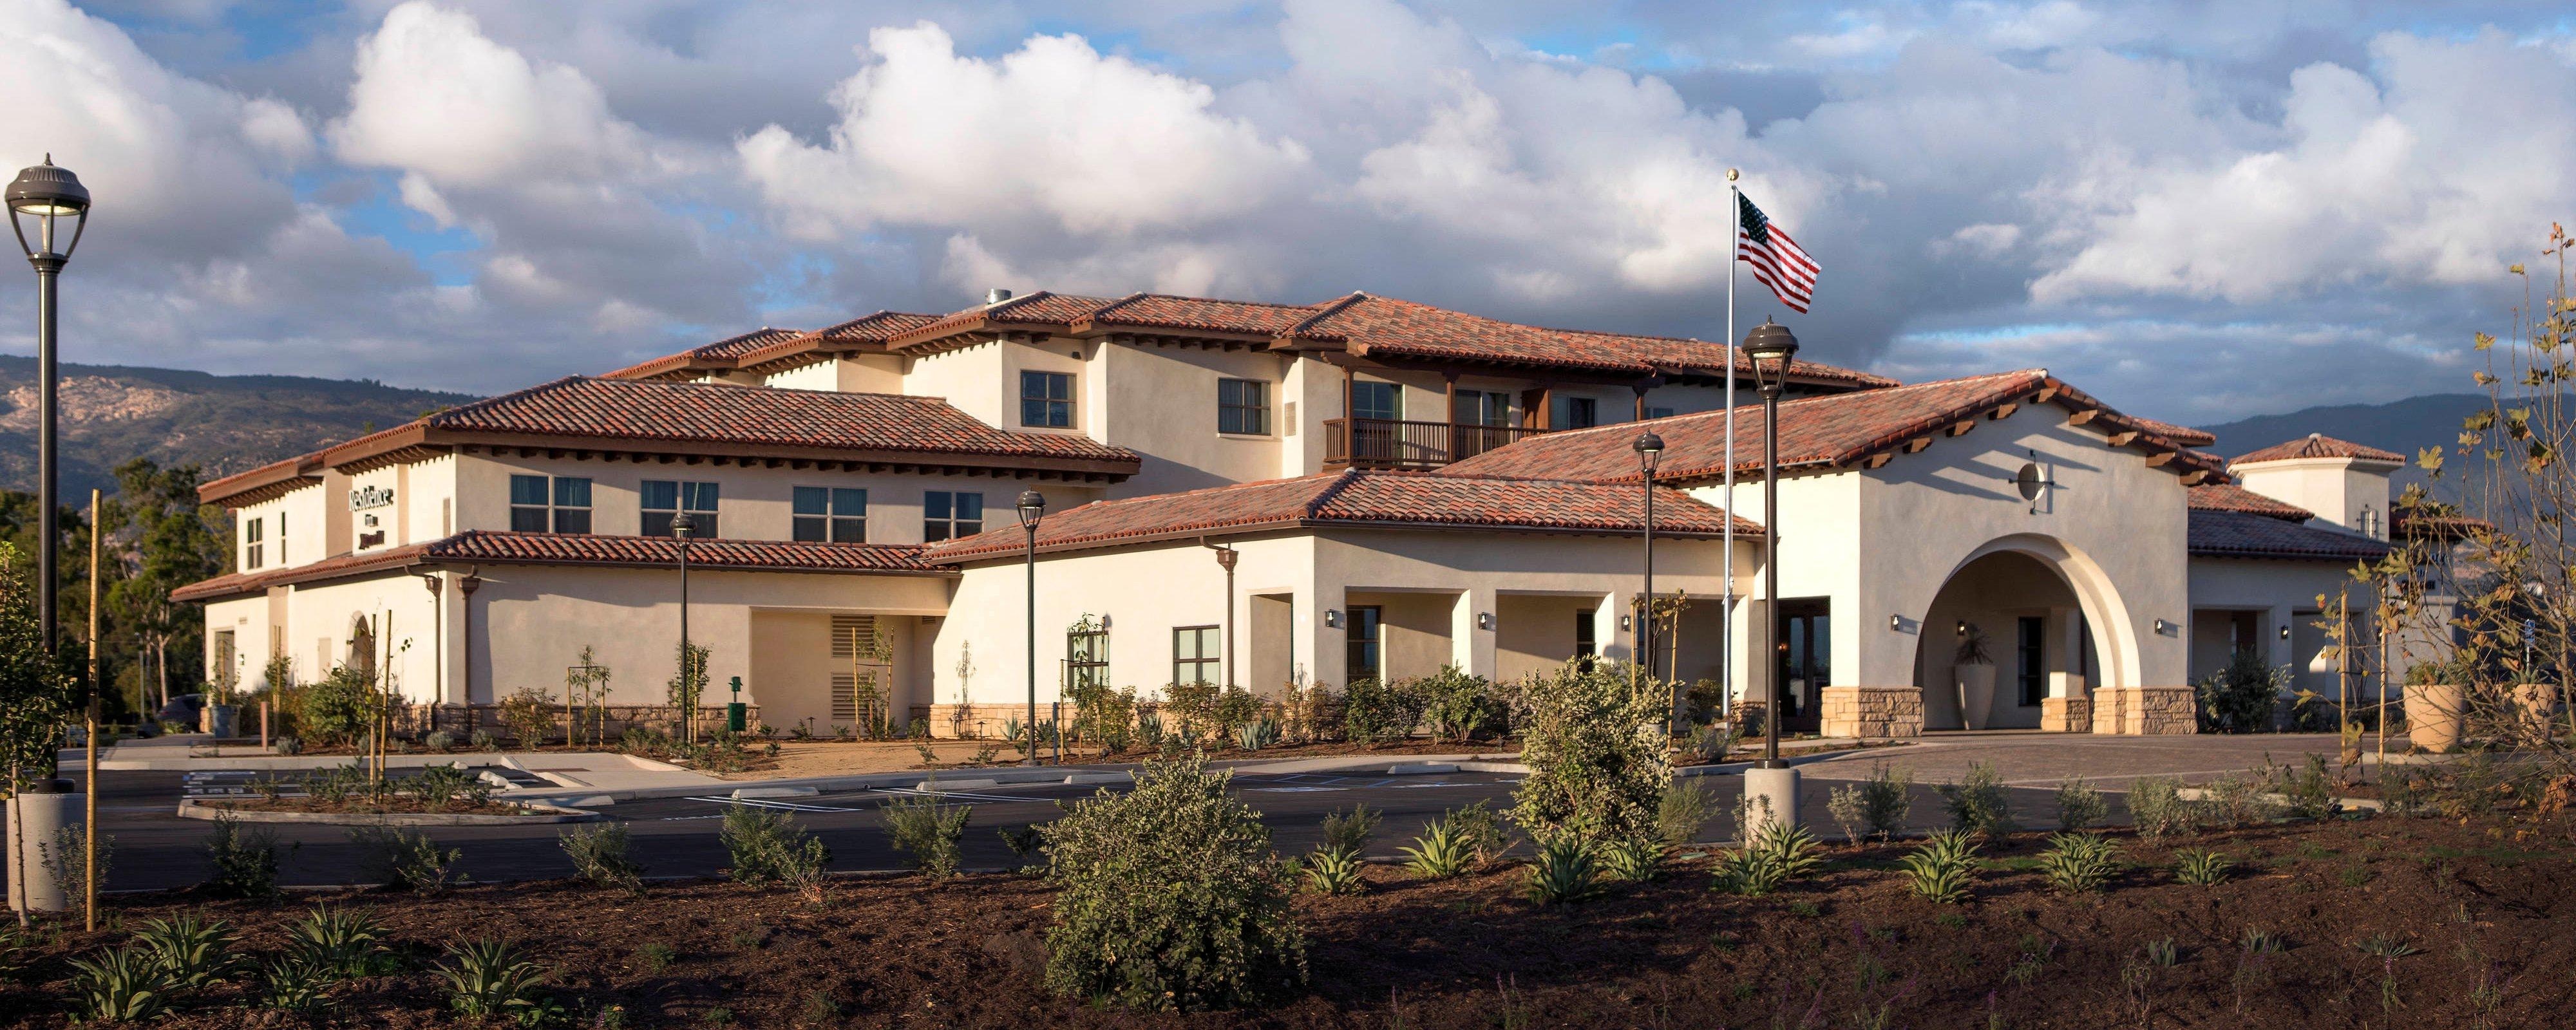 Extended Stay Santa Barbara | Residence Inn Santa Barbara ...